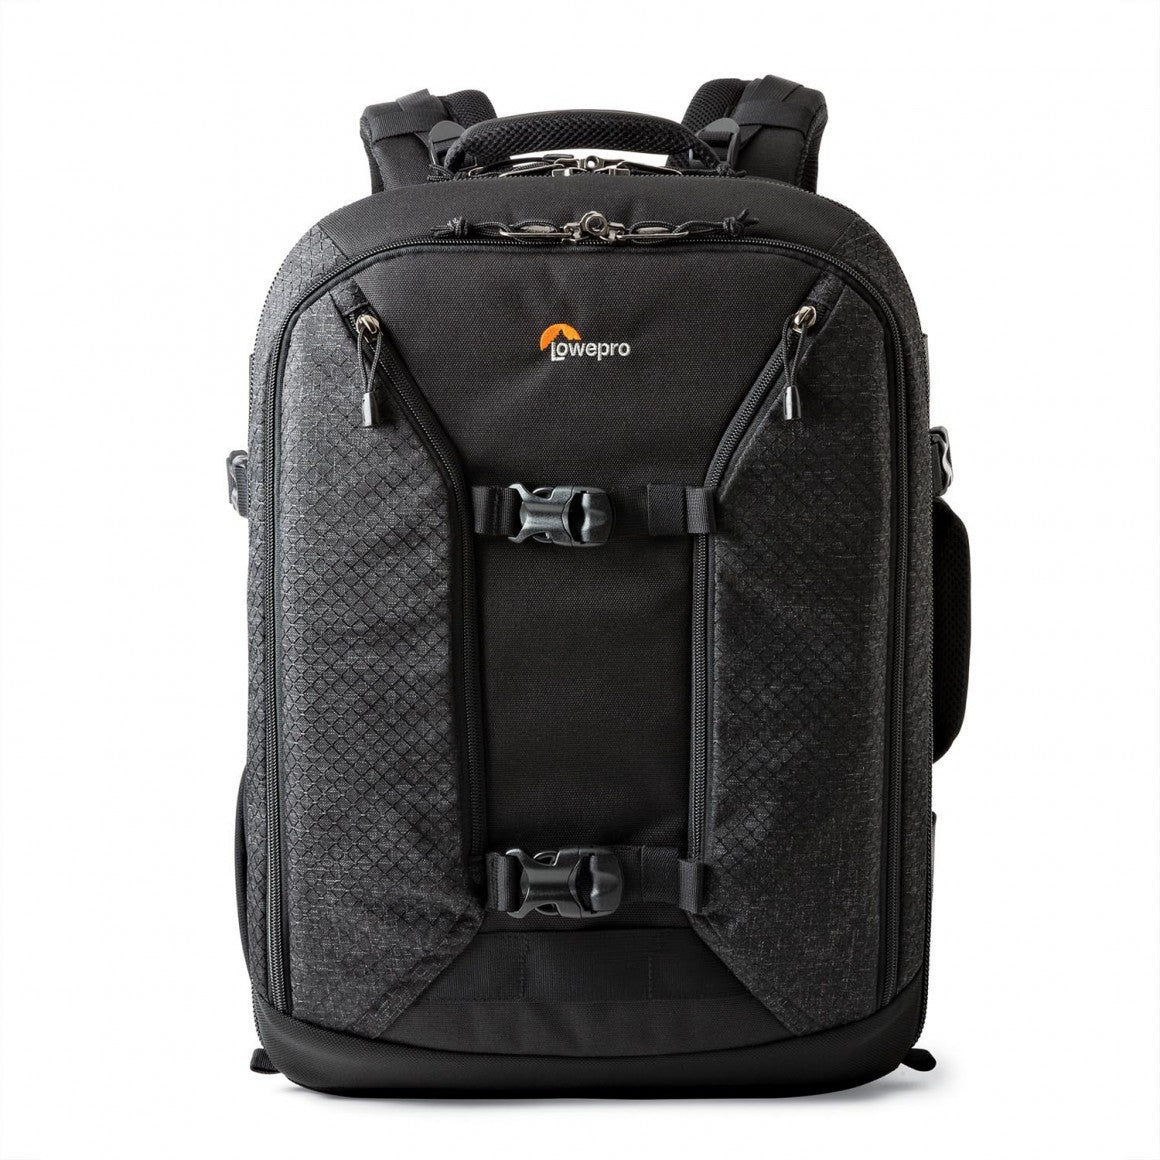 Lowepro Pro Runner 450 AW II Backpack (Black), bags backpacks, Lowepro - Pictureline  - 1